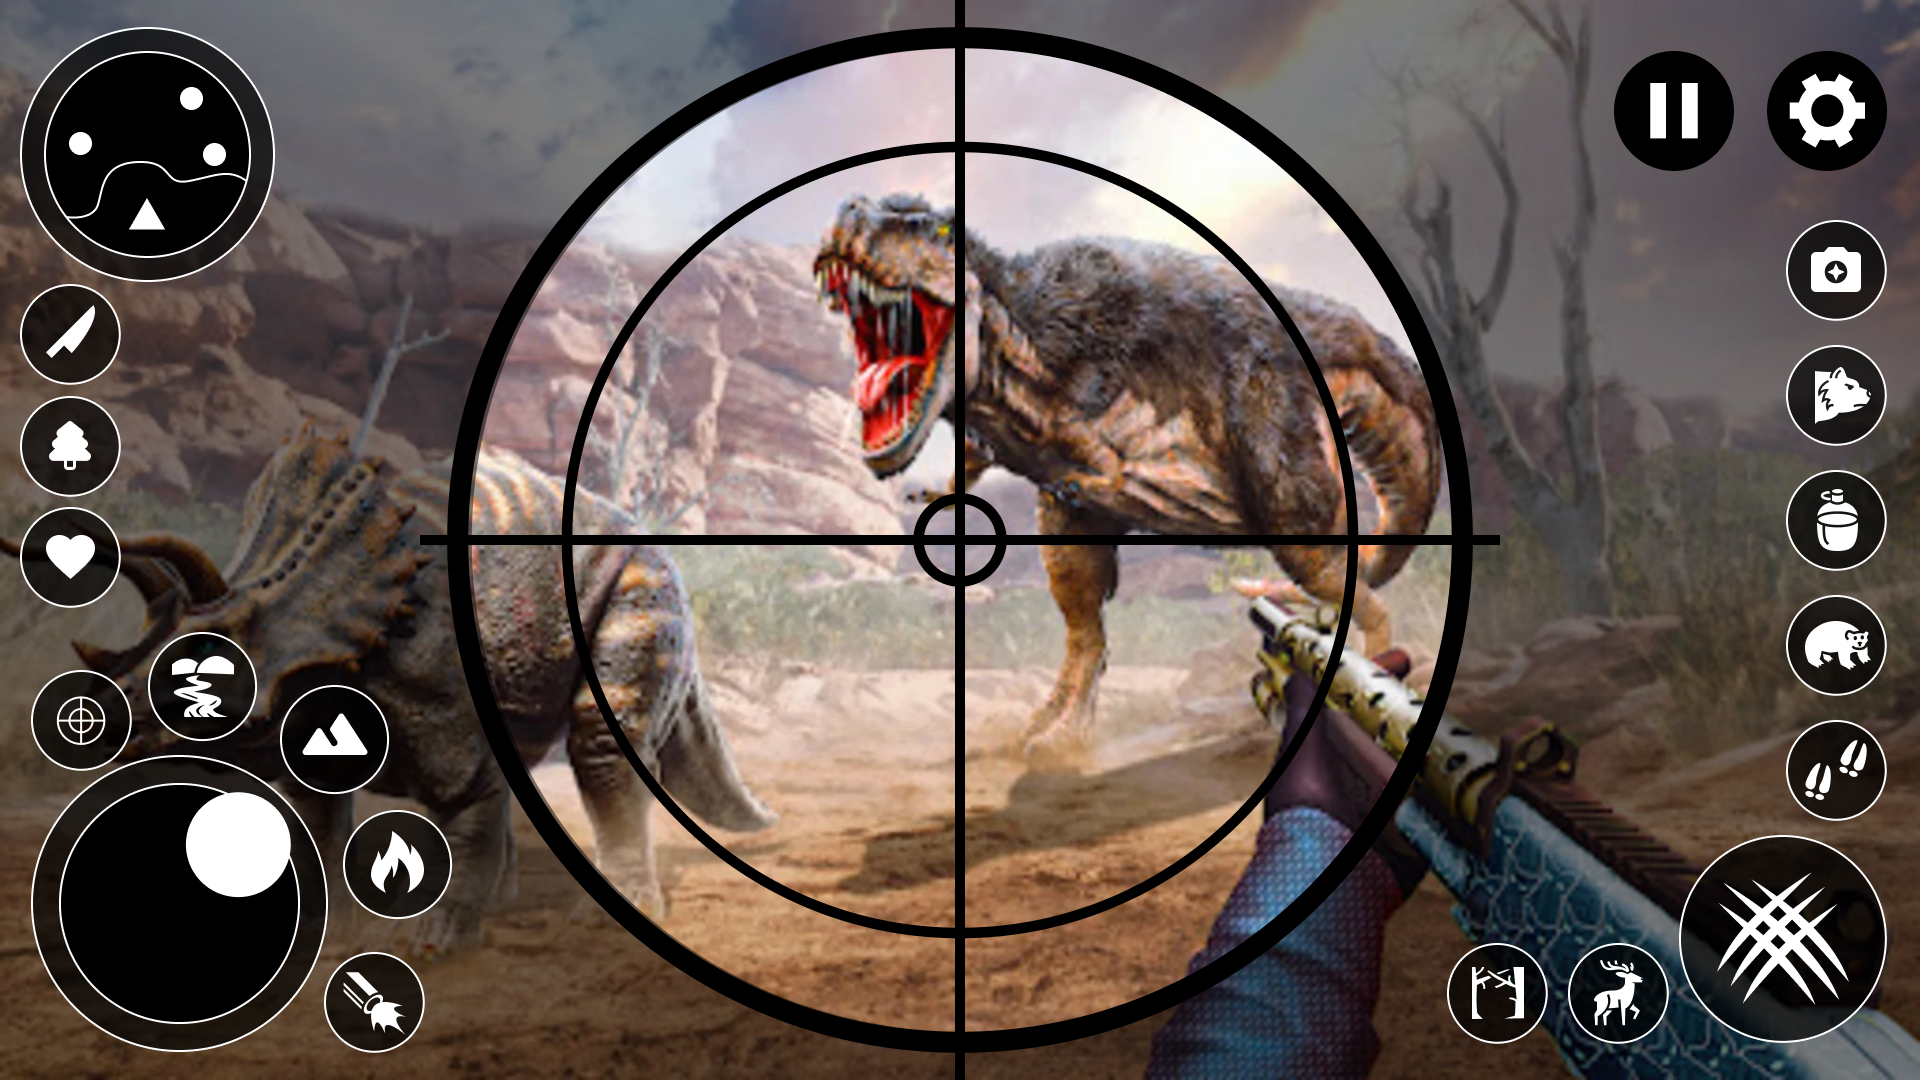 Download Real Dinosaur Hunting Gun Game on PC with MEmu